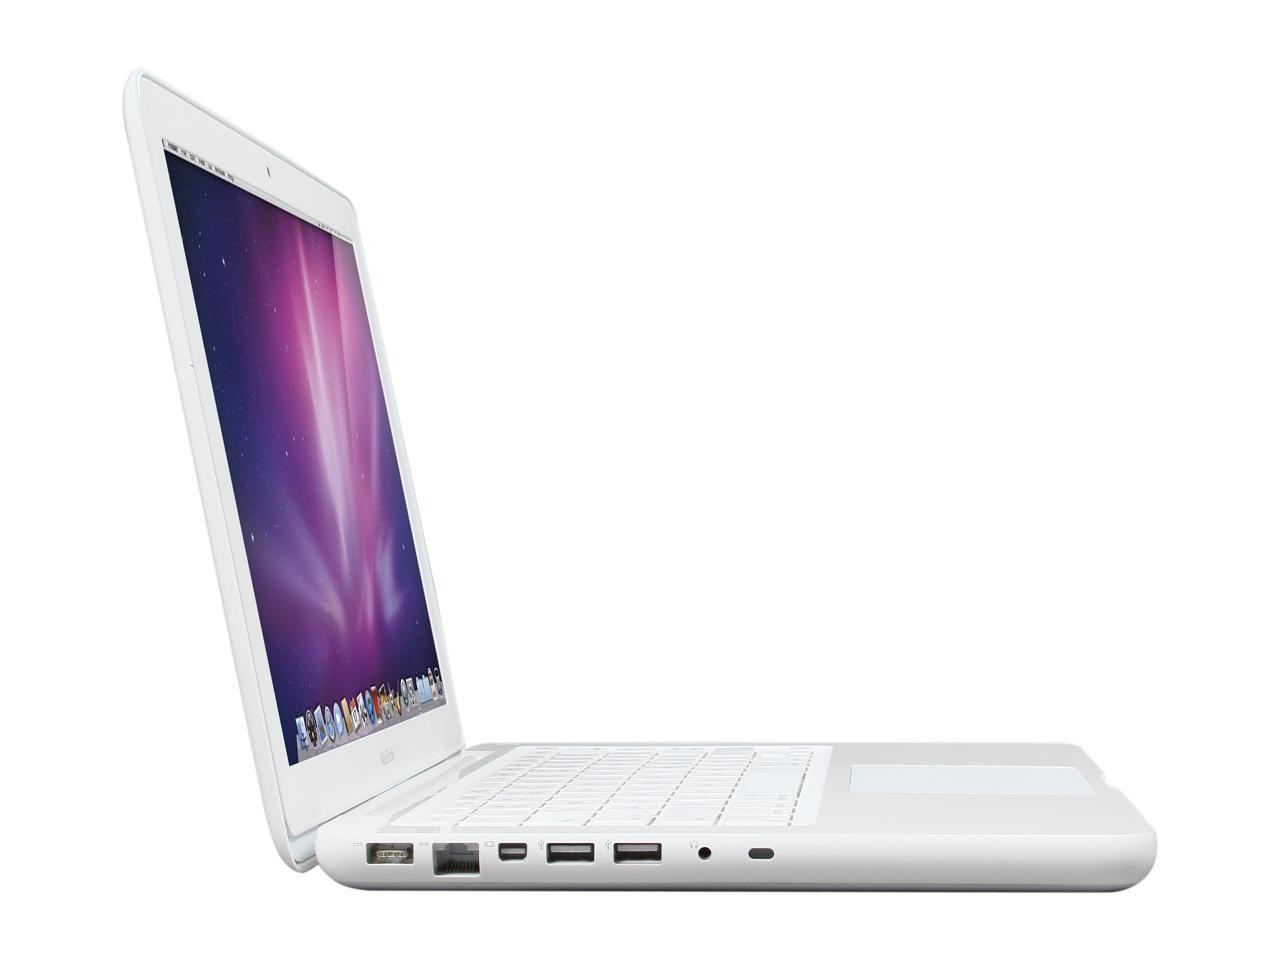 apple-mid-2010-13.3-inch-macbook-a1342-white-c2d - 2.4ghz processor, 4gb ram, 320m - 256mb gpu-mc516ll/a-4